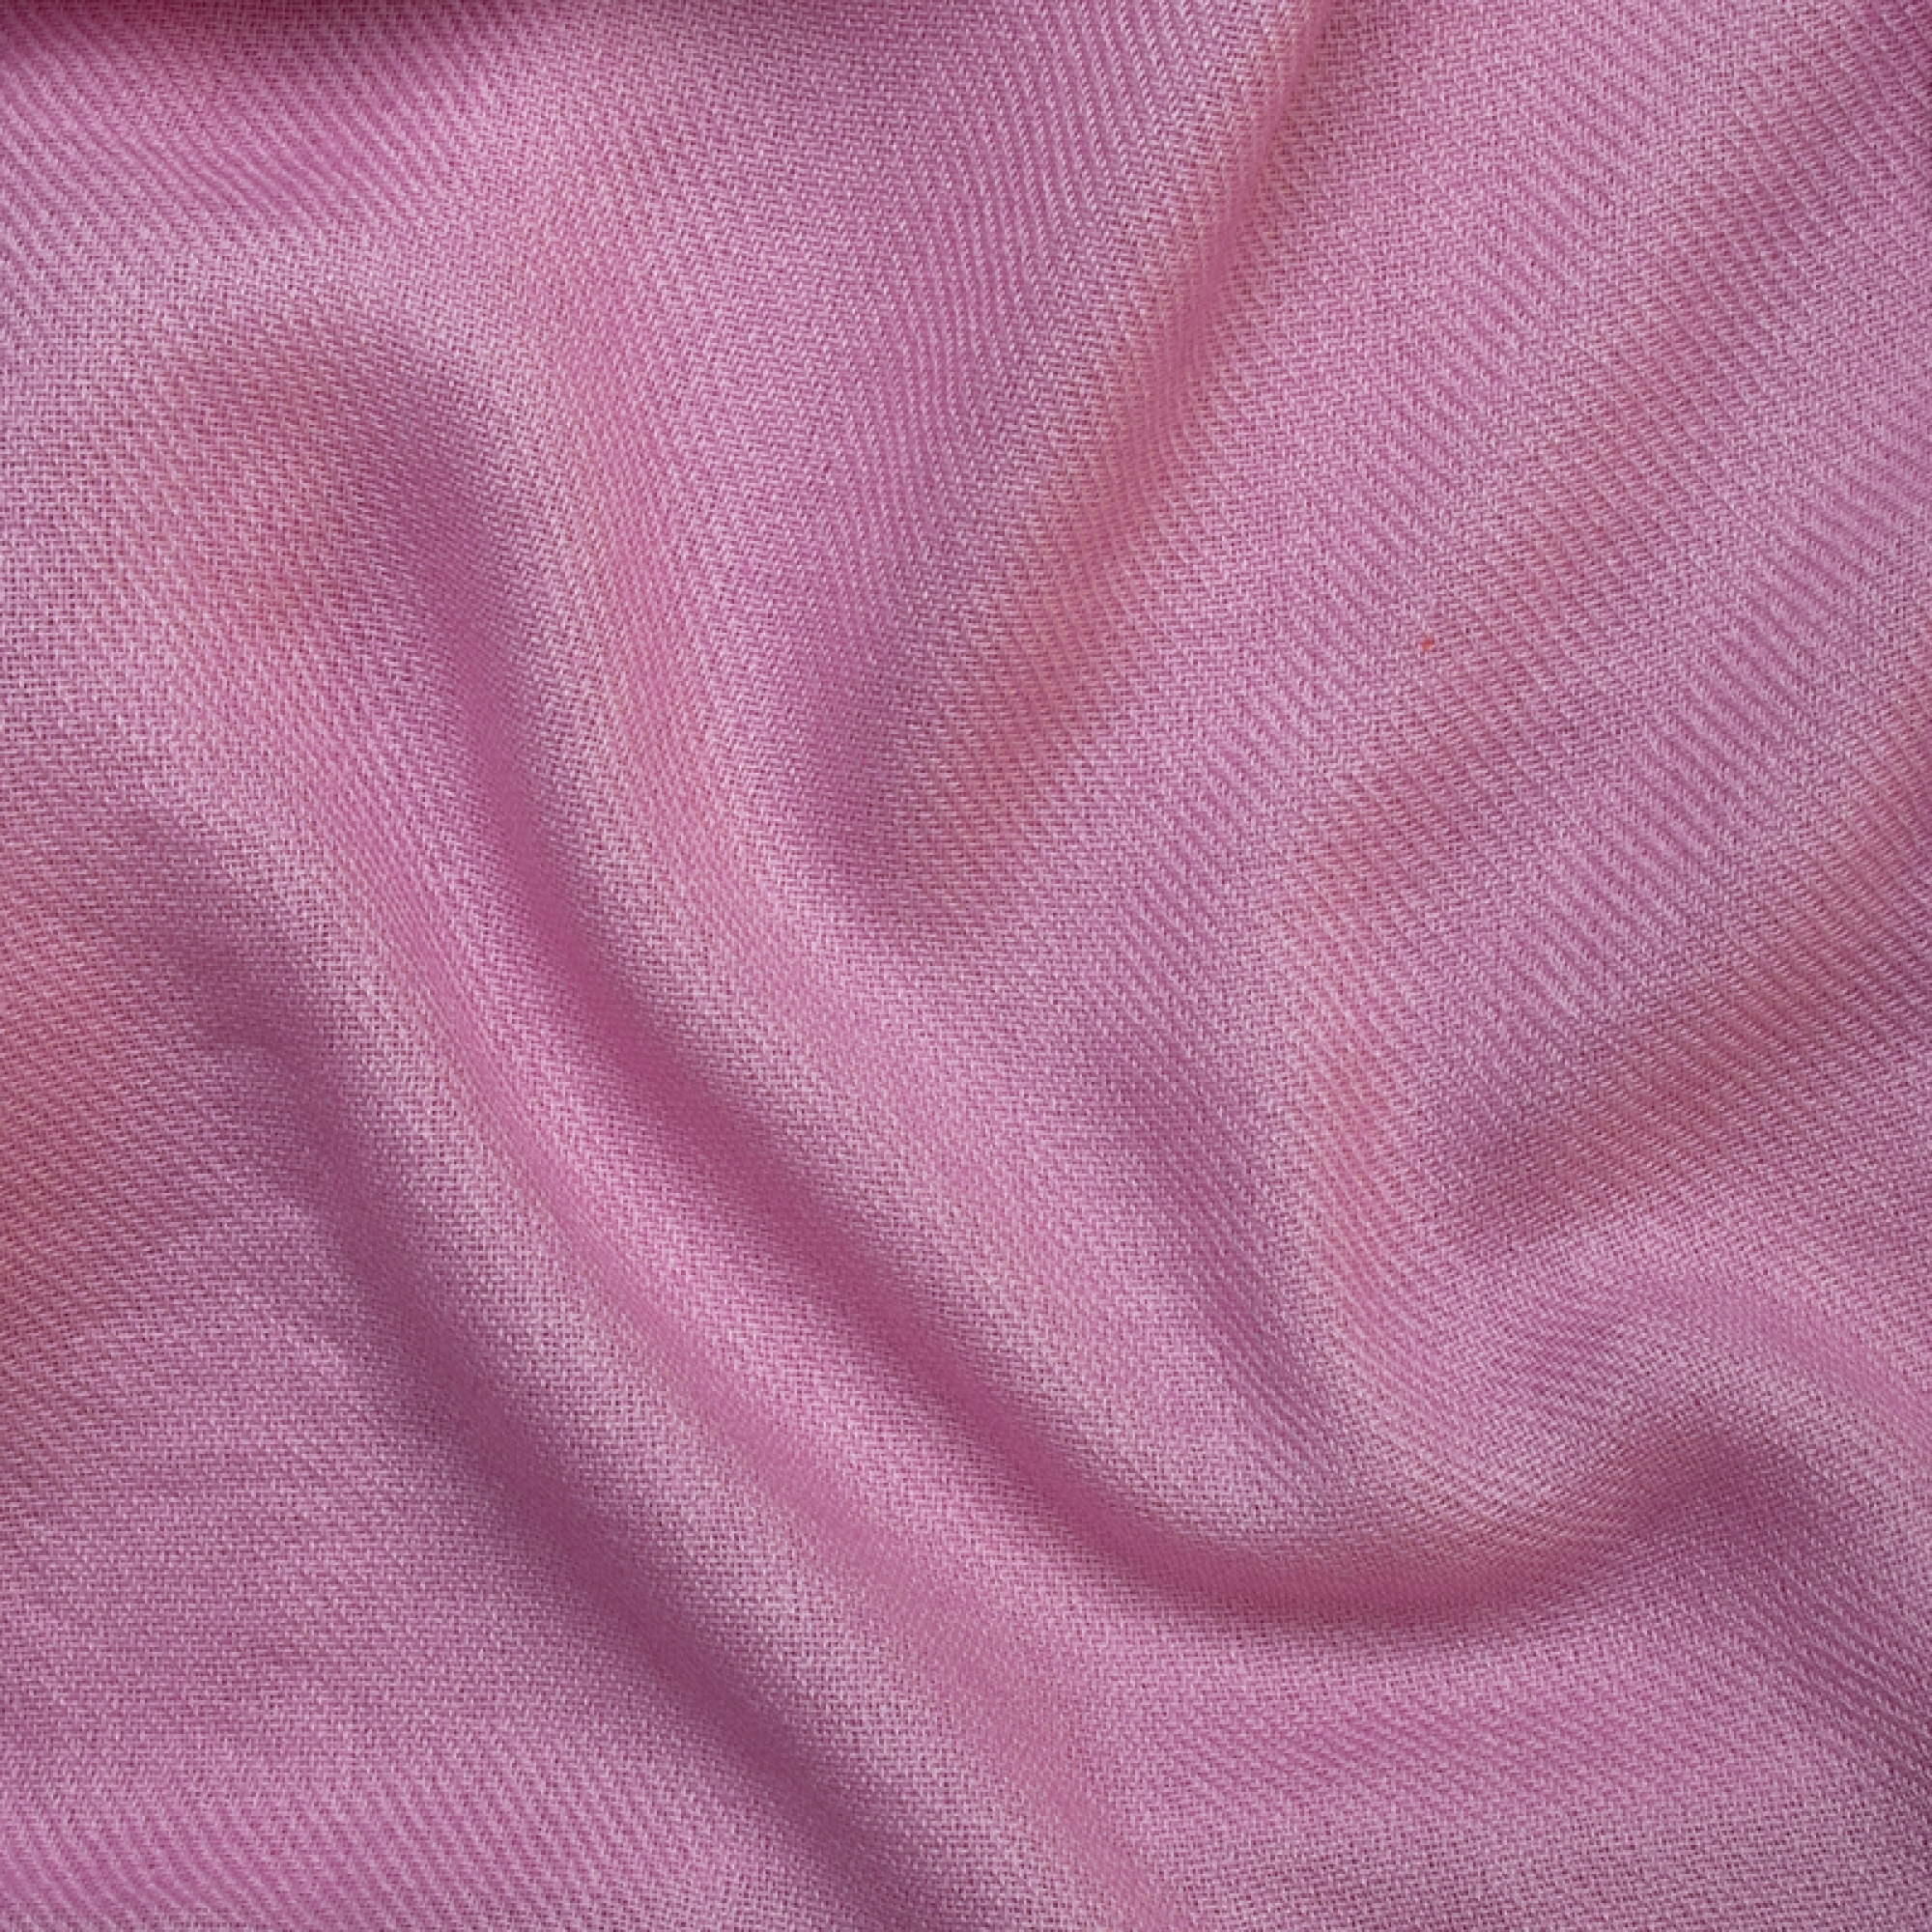 Cashmere ladies toodoo plain s 140 x 200 pink lavender 140 x 200 cm